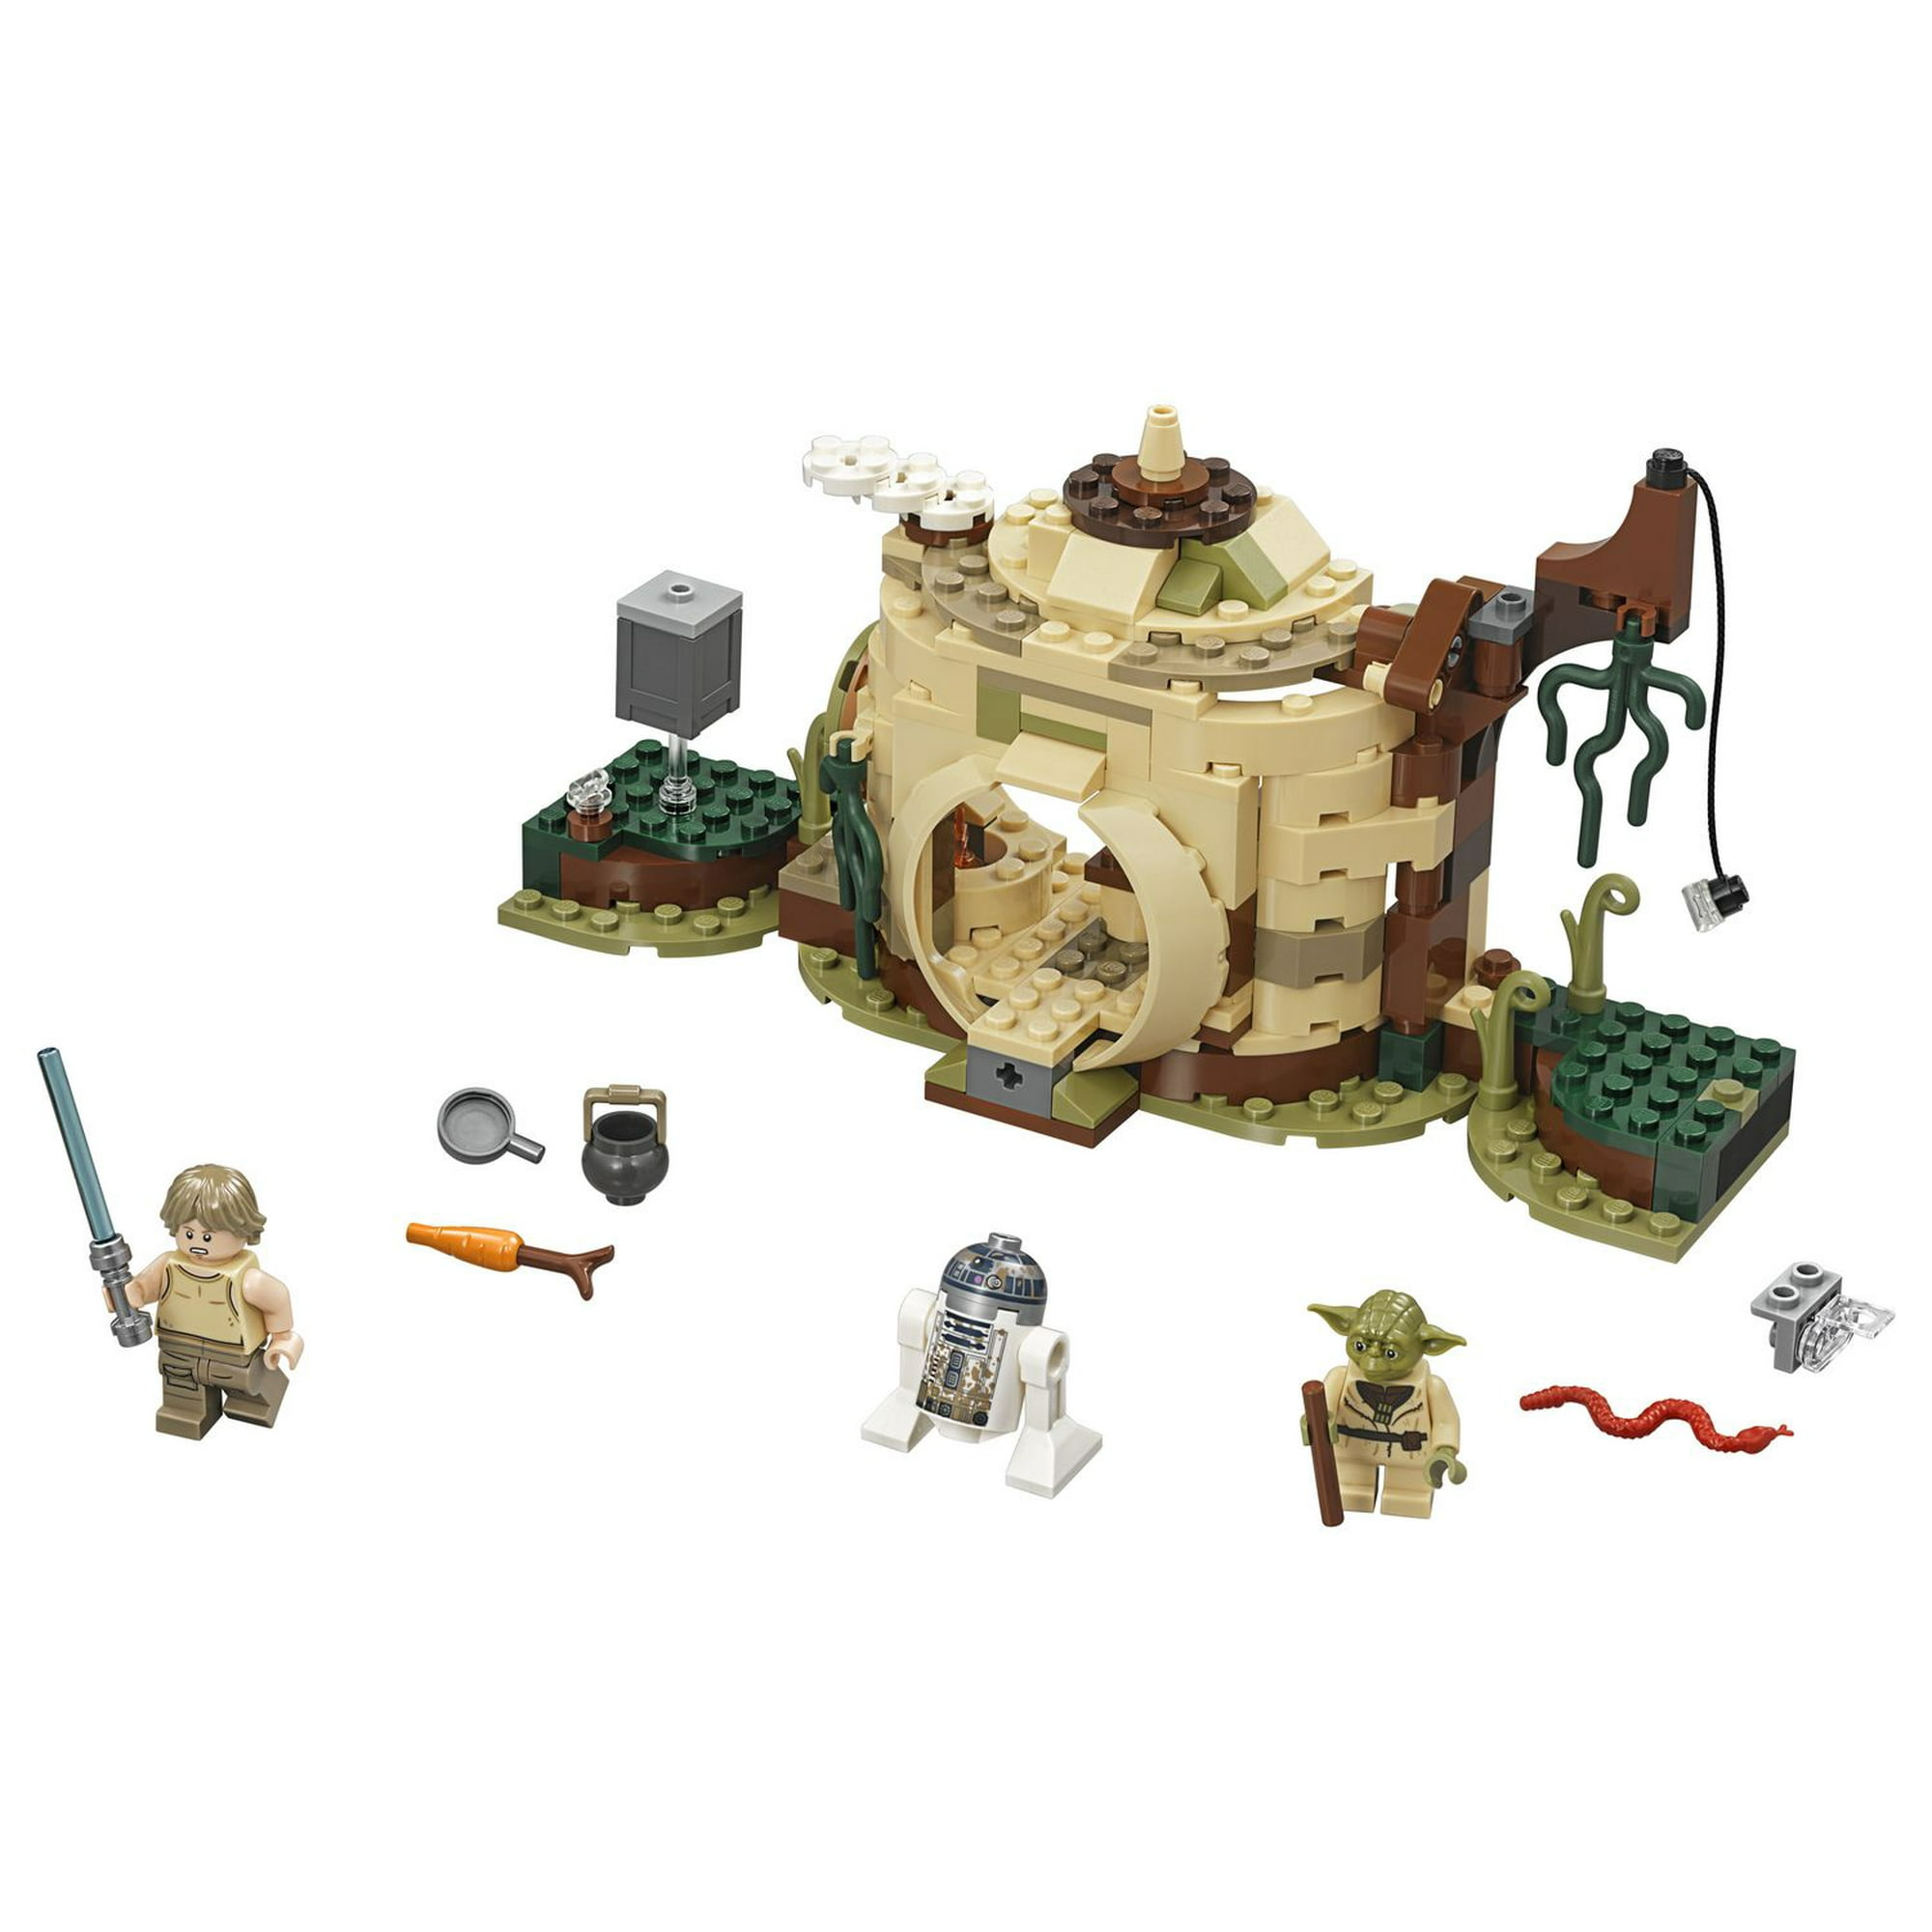 LEGO Star Wars: The Empire Strikes Back Yoda's Hut 75208 Toy